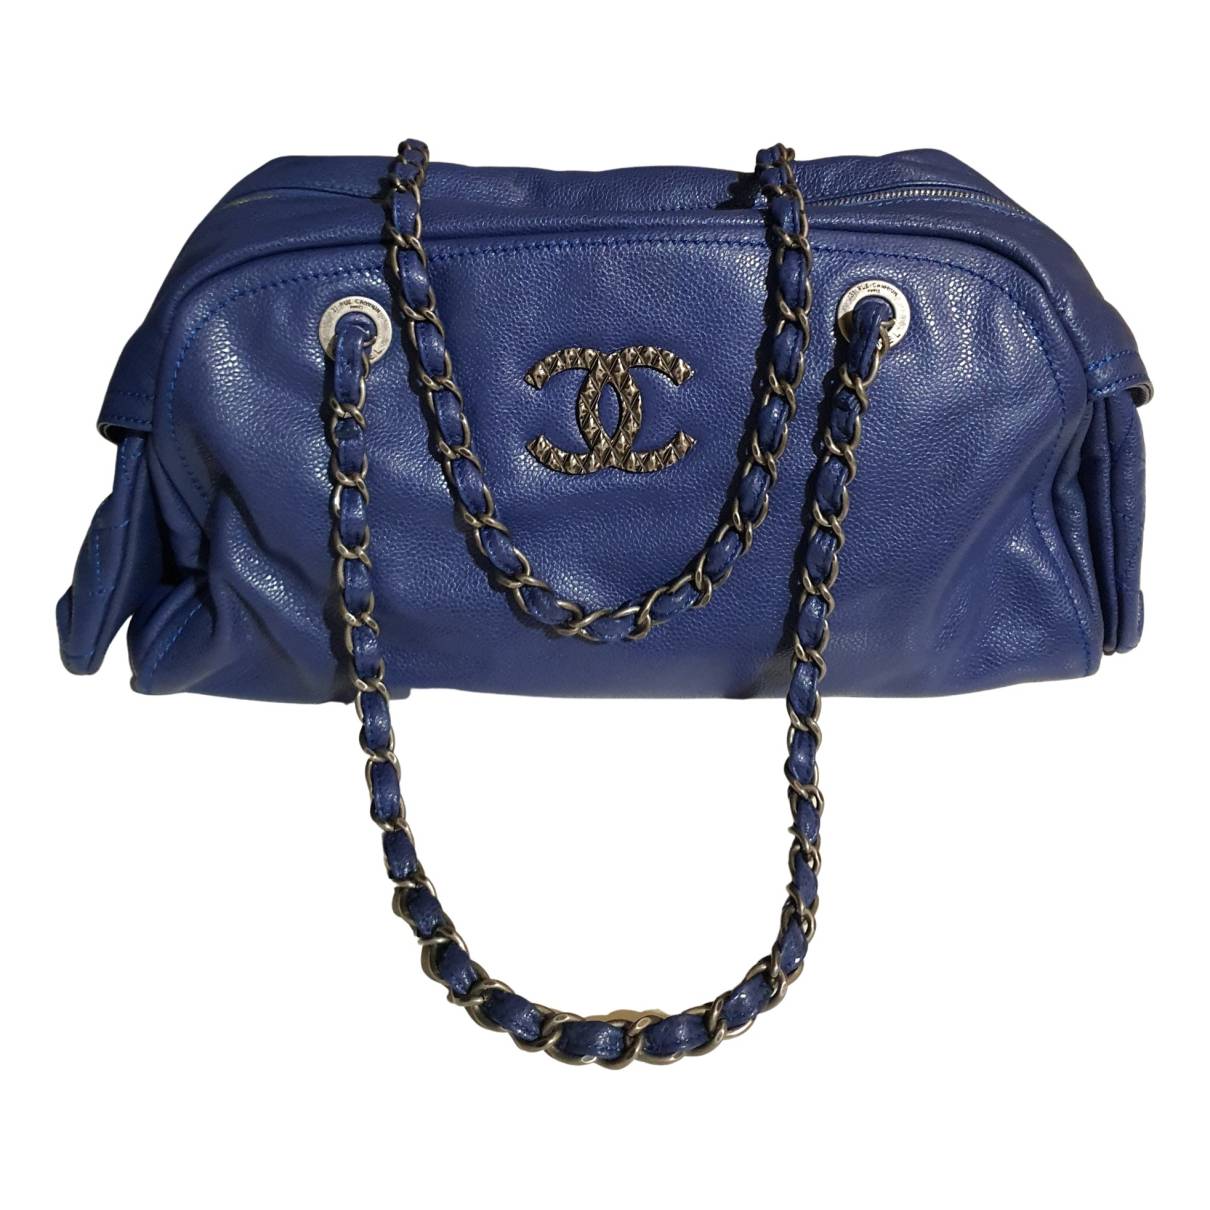 Chanel Authenticated Bowling Bag Handbag